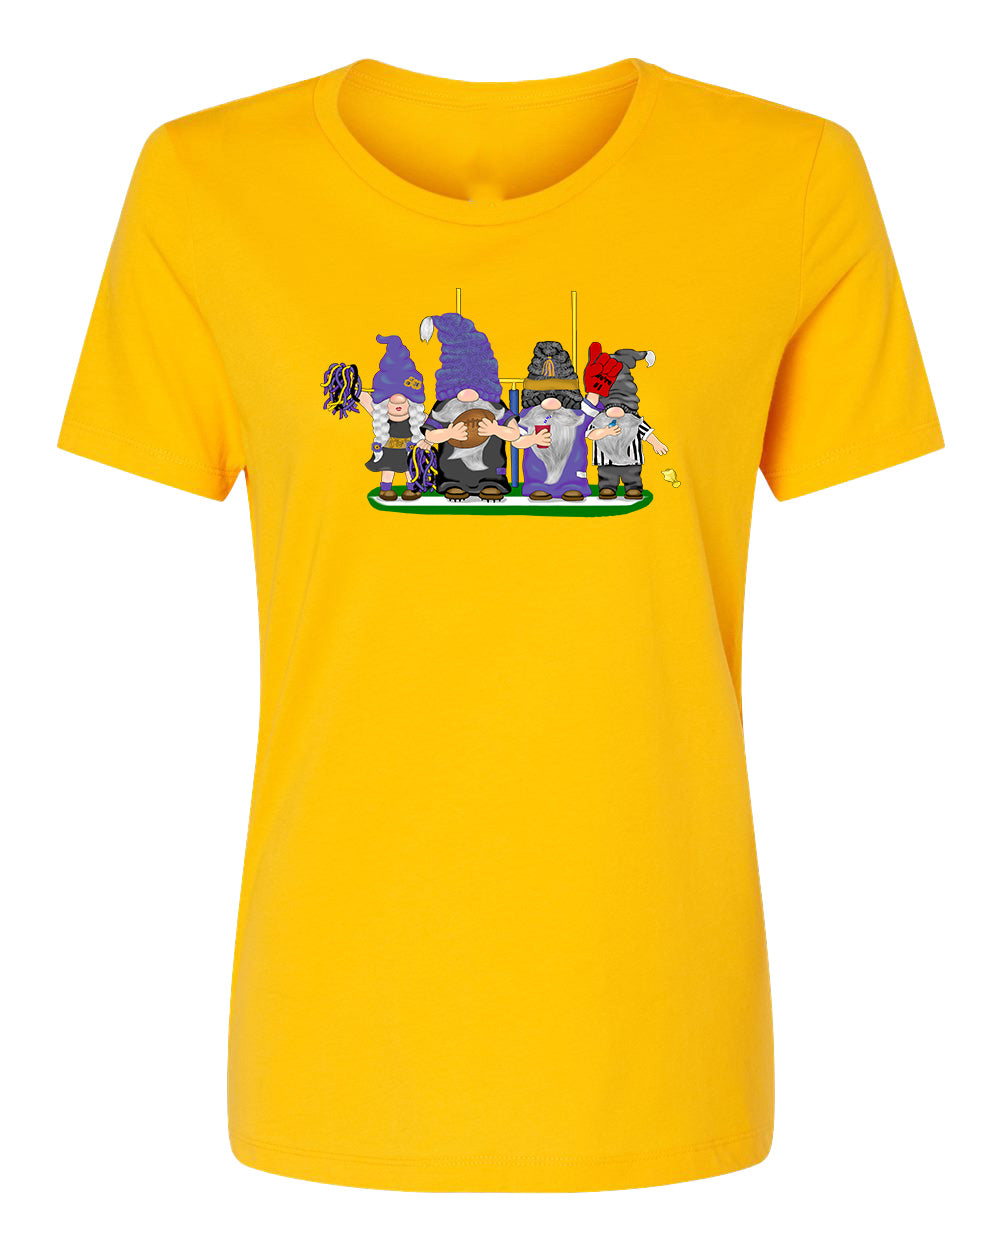 Purple & Black Football Gnomes on Women's T-shirt (similar to Baltimore)